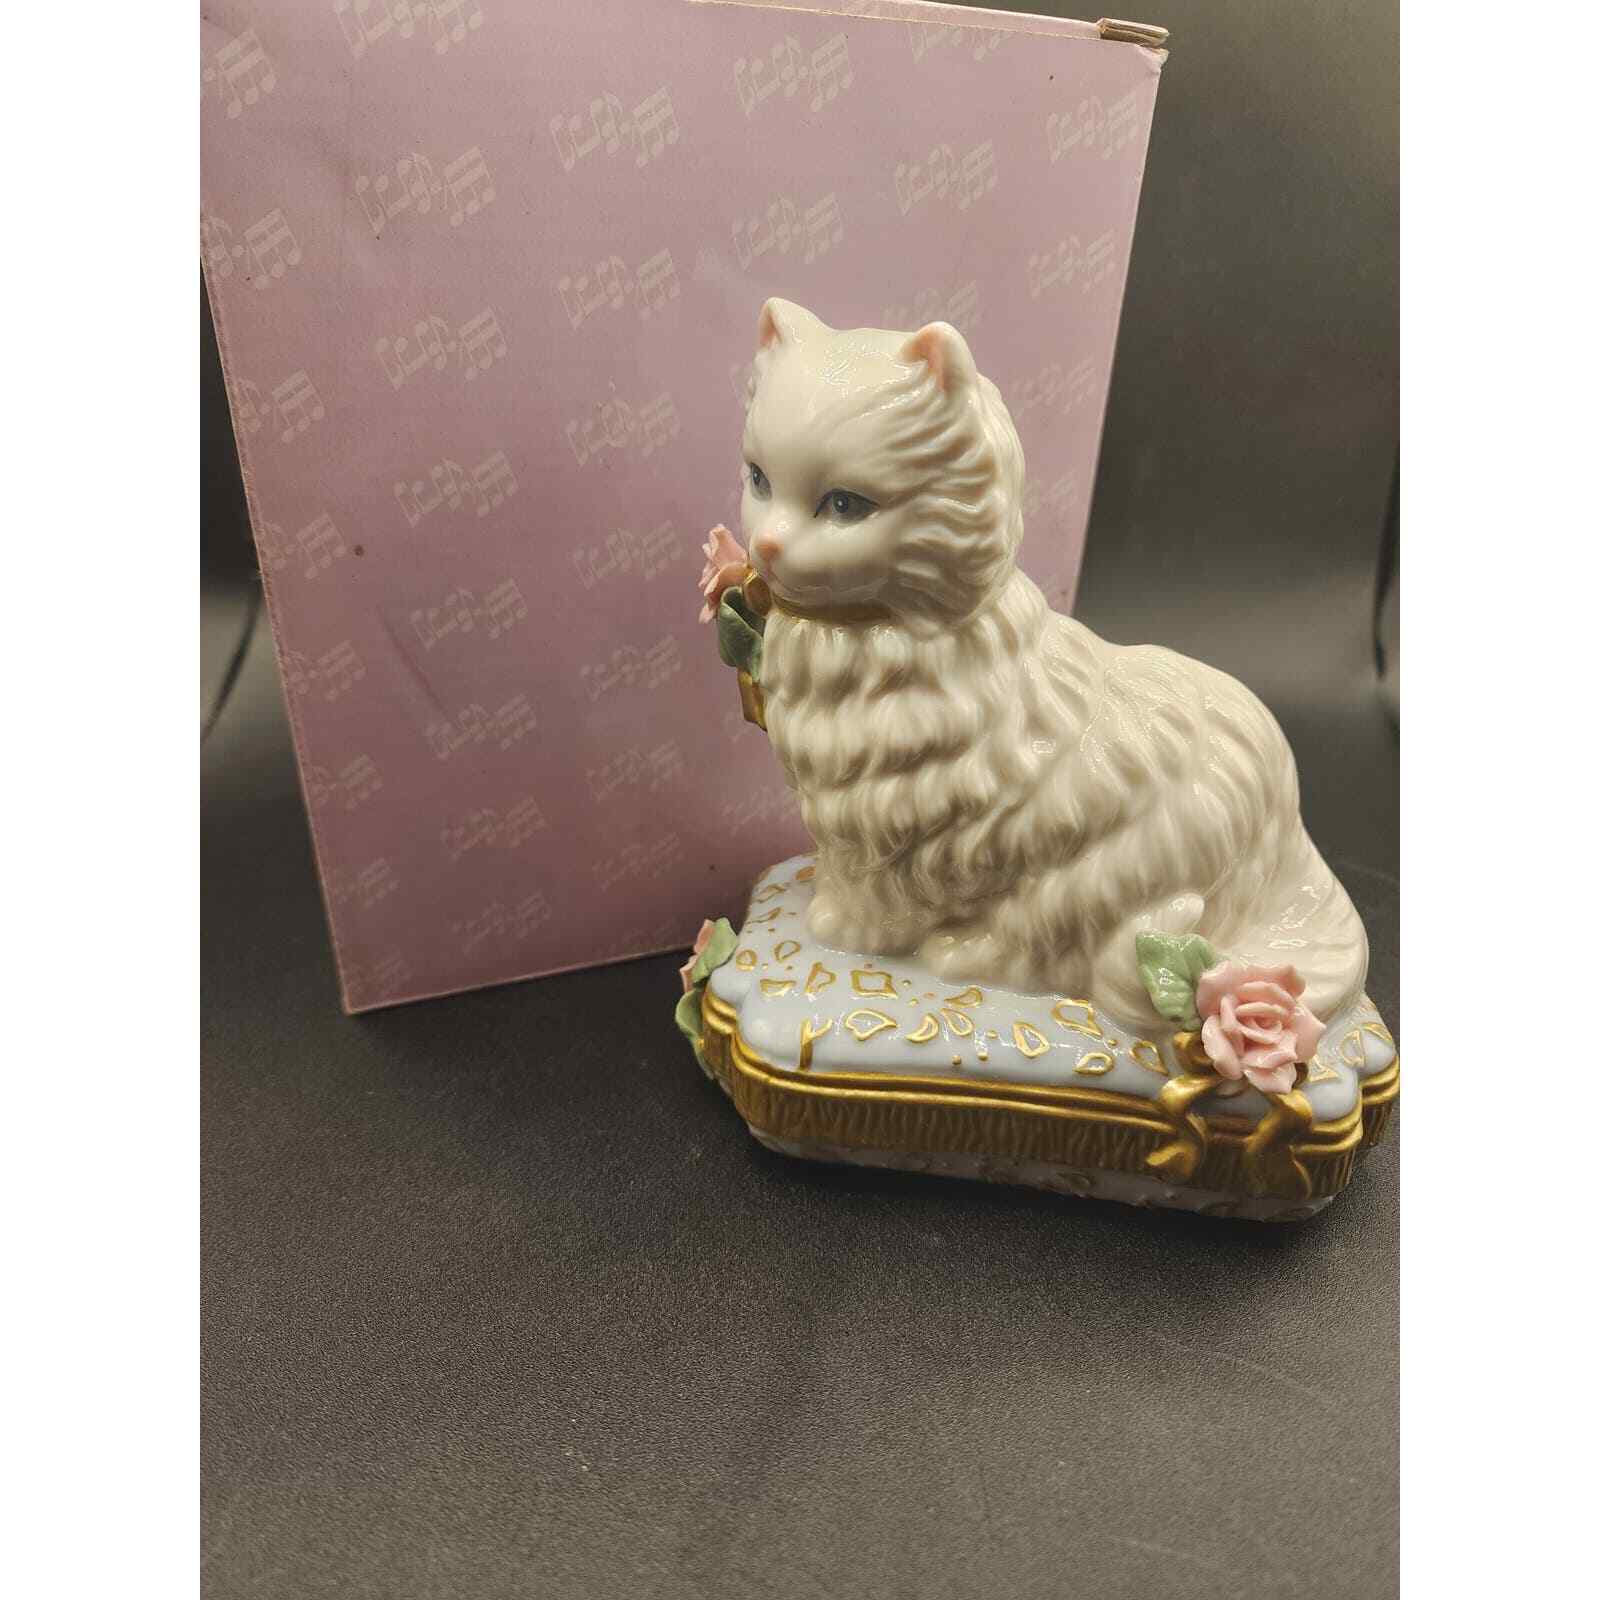 Vintage San Francisco Music Co. White Persian Ceramic CAT on Pillow MUSIC BOX